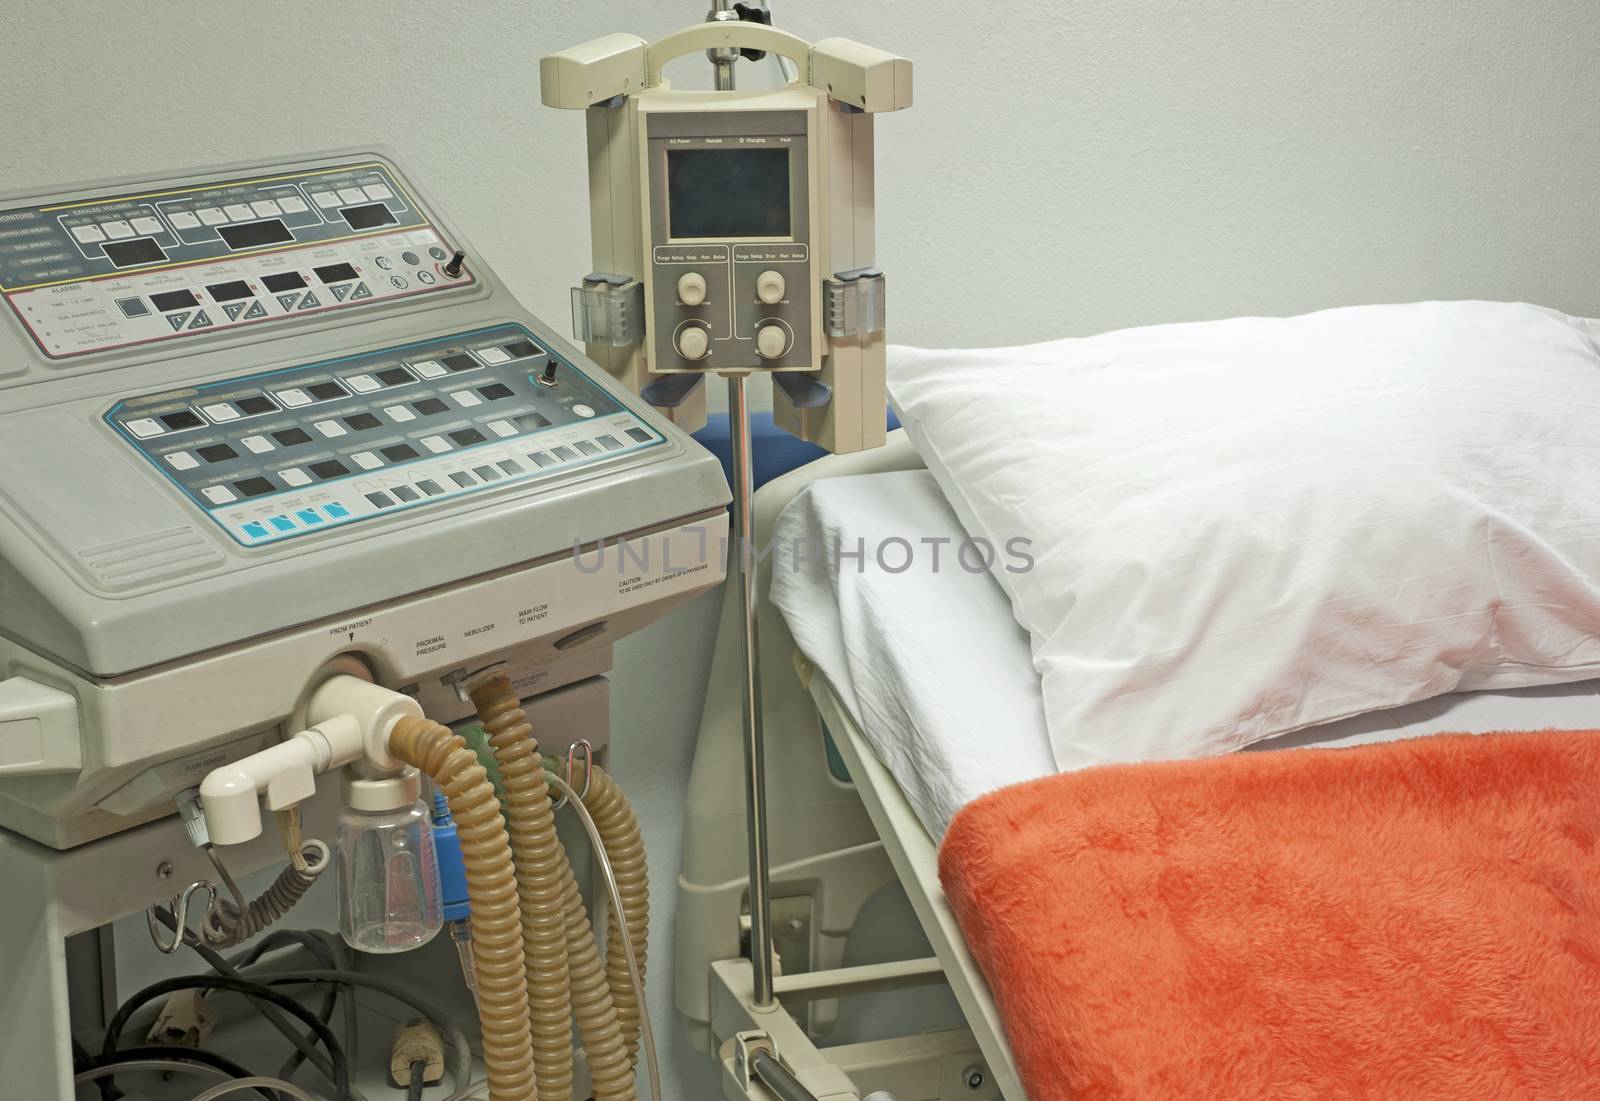 Ventilator next to a hospital bed by paulvinten